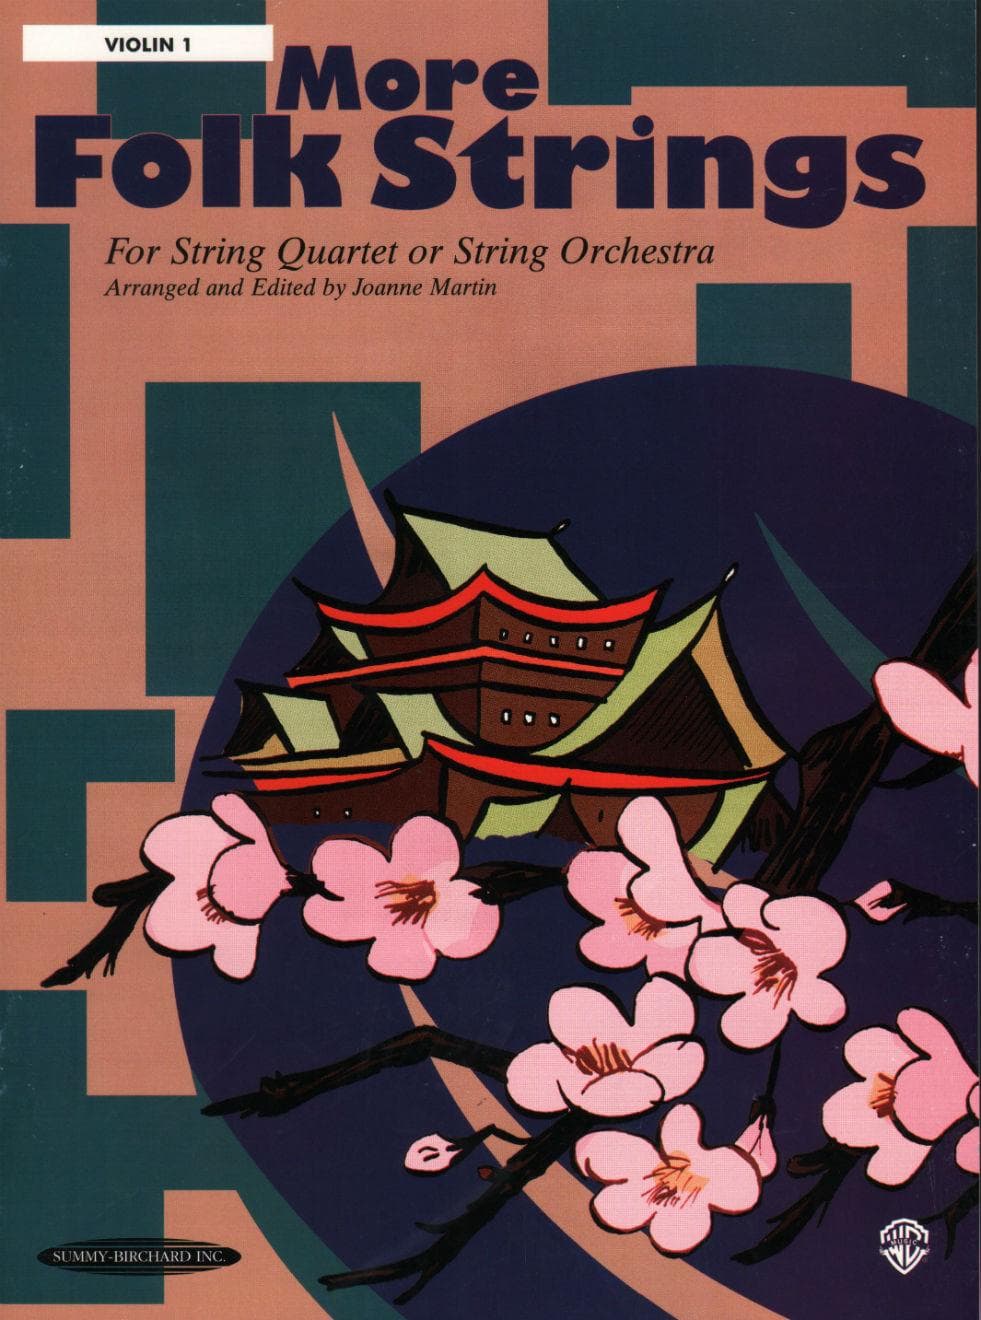 Martin, Joanne - More Folk Strings for String Quartet or String Orchestra - Violin 1 part - Alfred Music Publishing